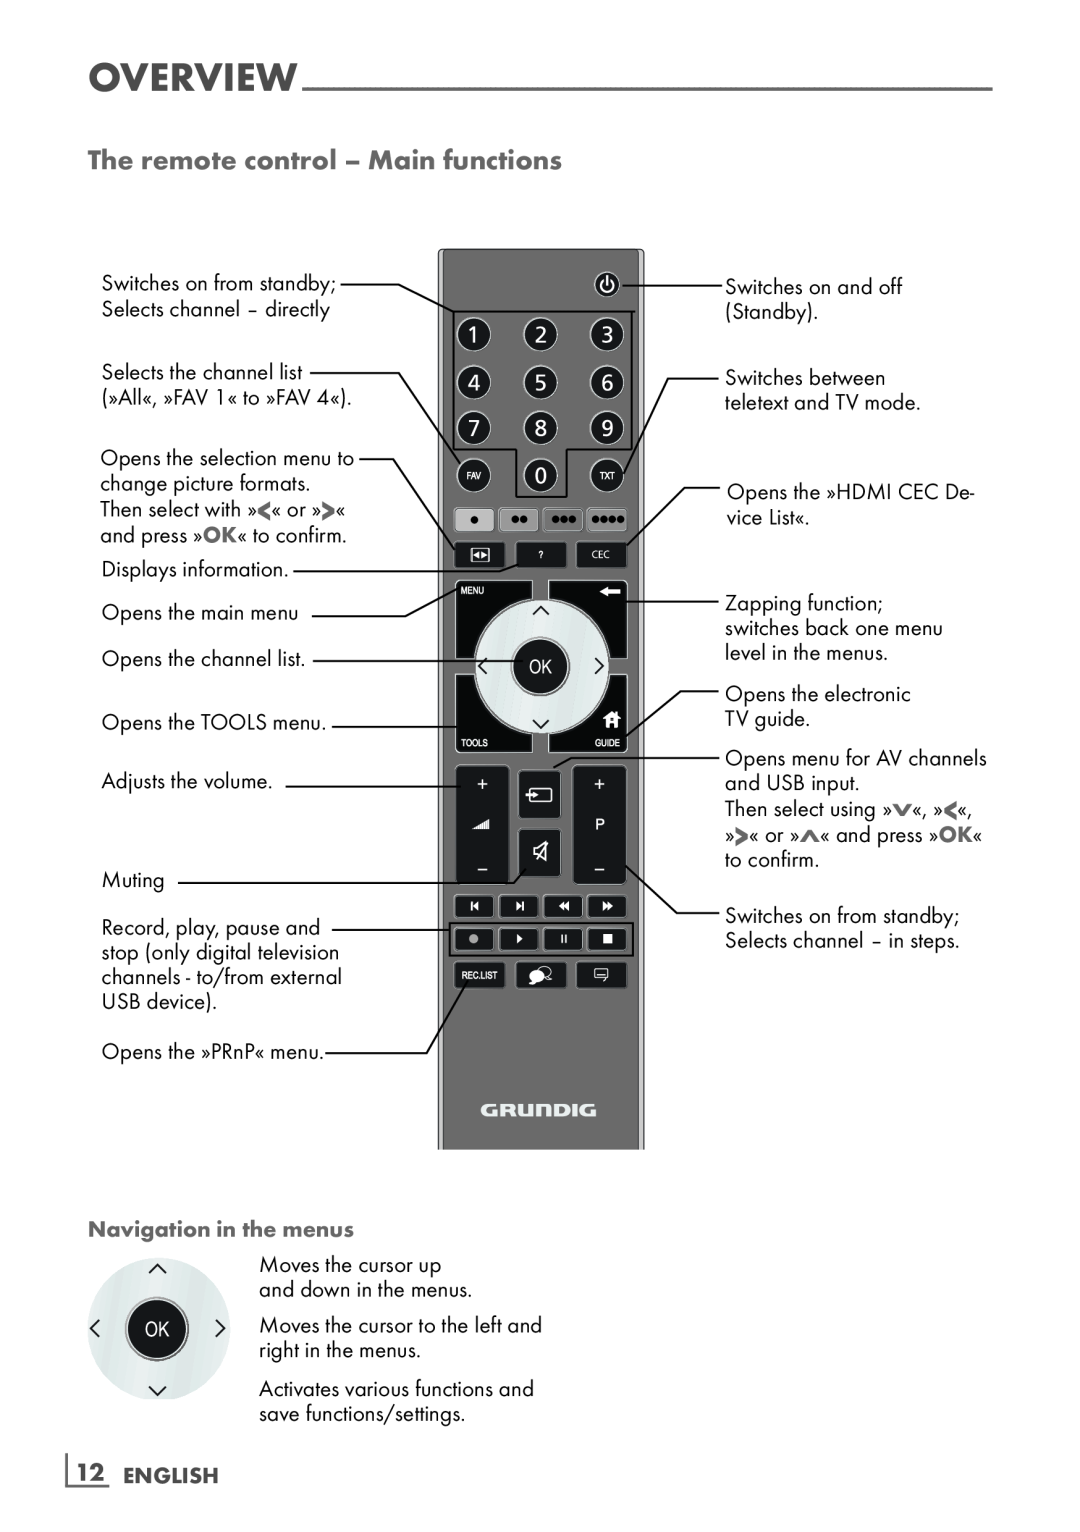 Grundig 40 VLE 8130 BG manual The remote control - Main functions, ­12 ENGLISH, Navigation in the menus 